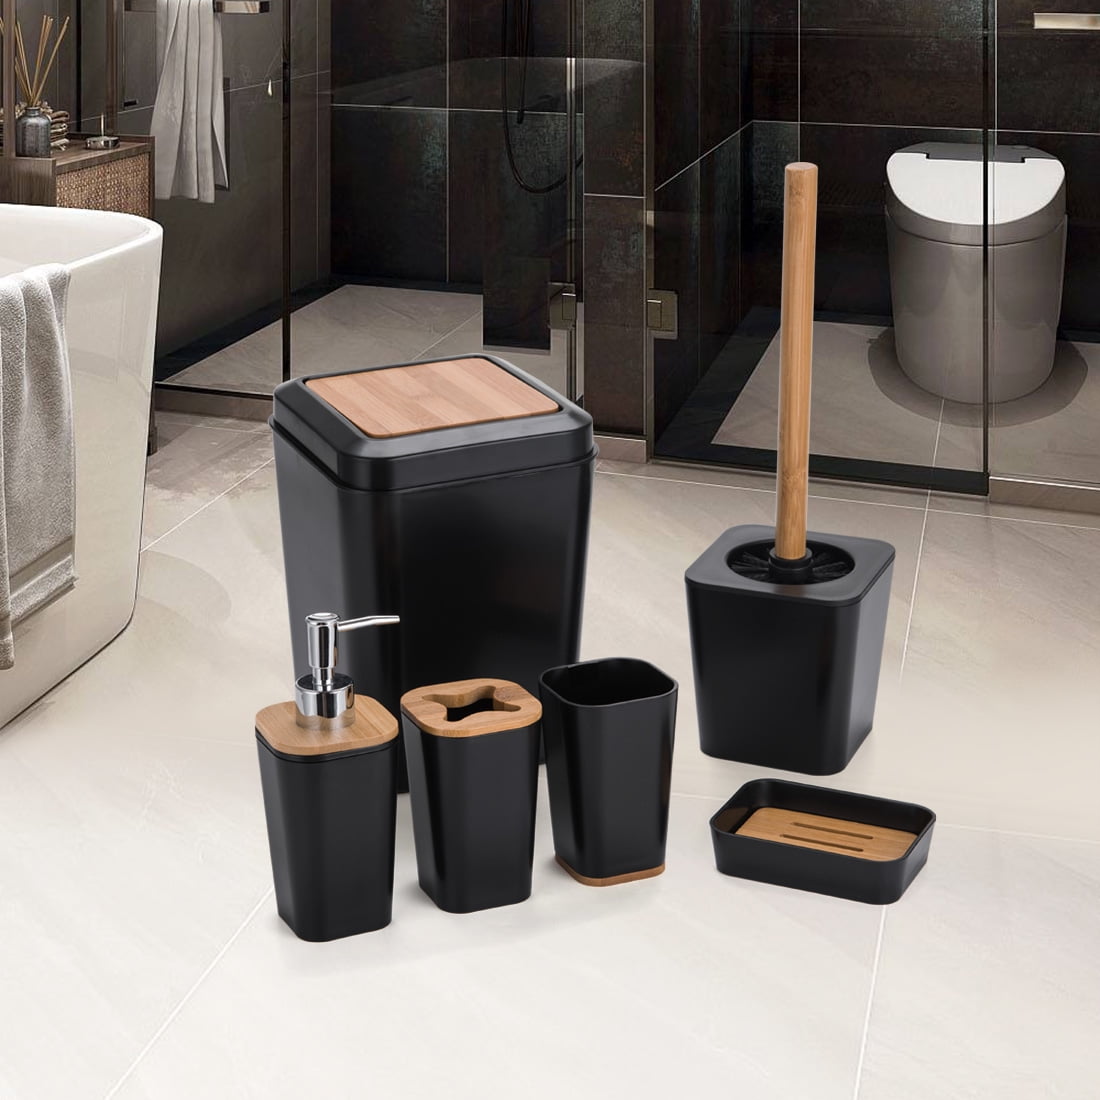 KRALIX Bathroom Set 6 Pieces Black Plastic/Bamboo Bathroom Accessories